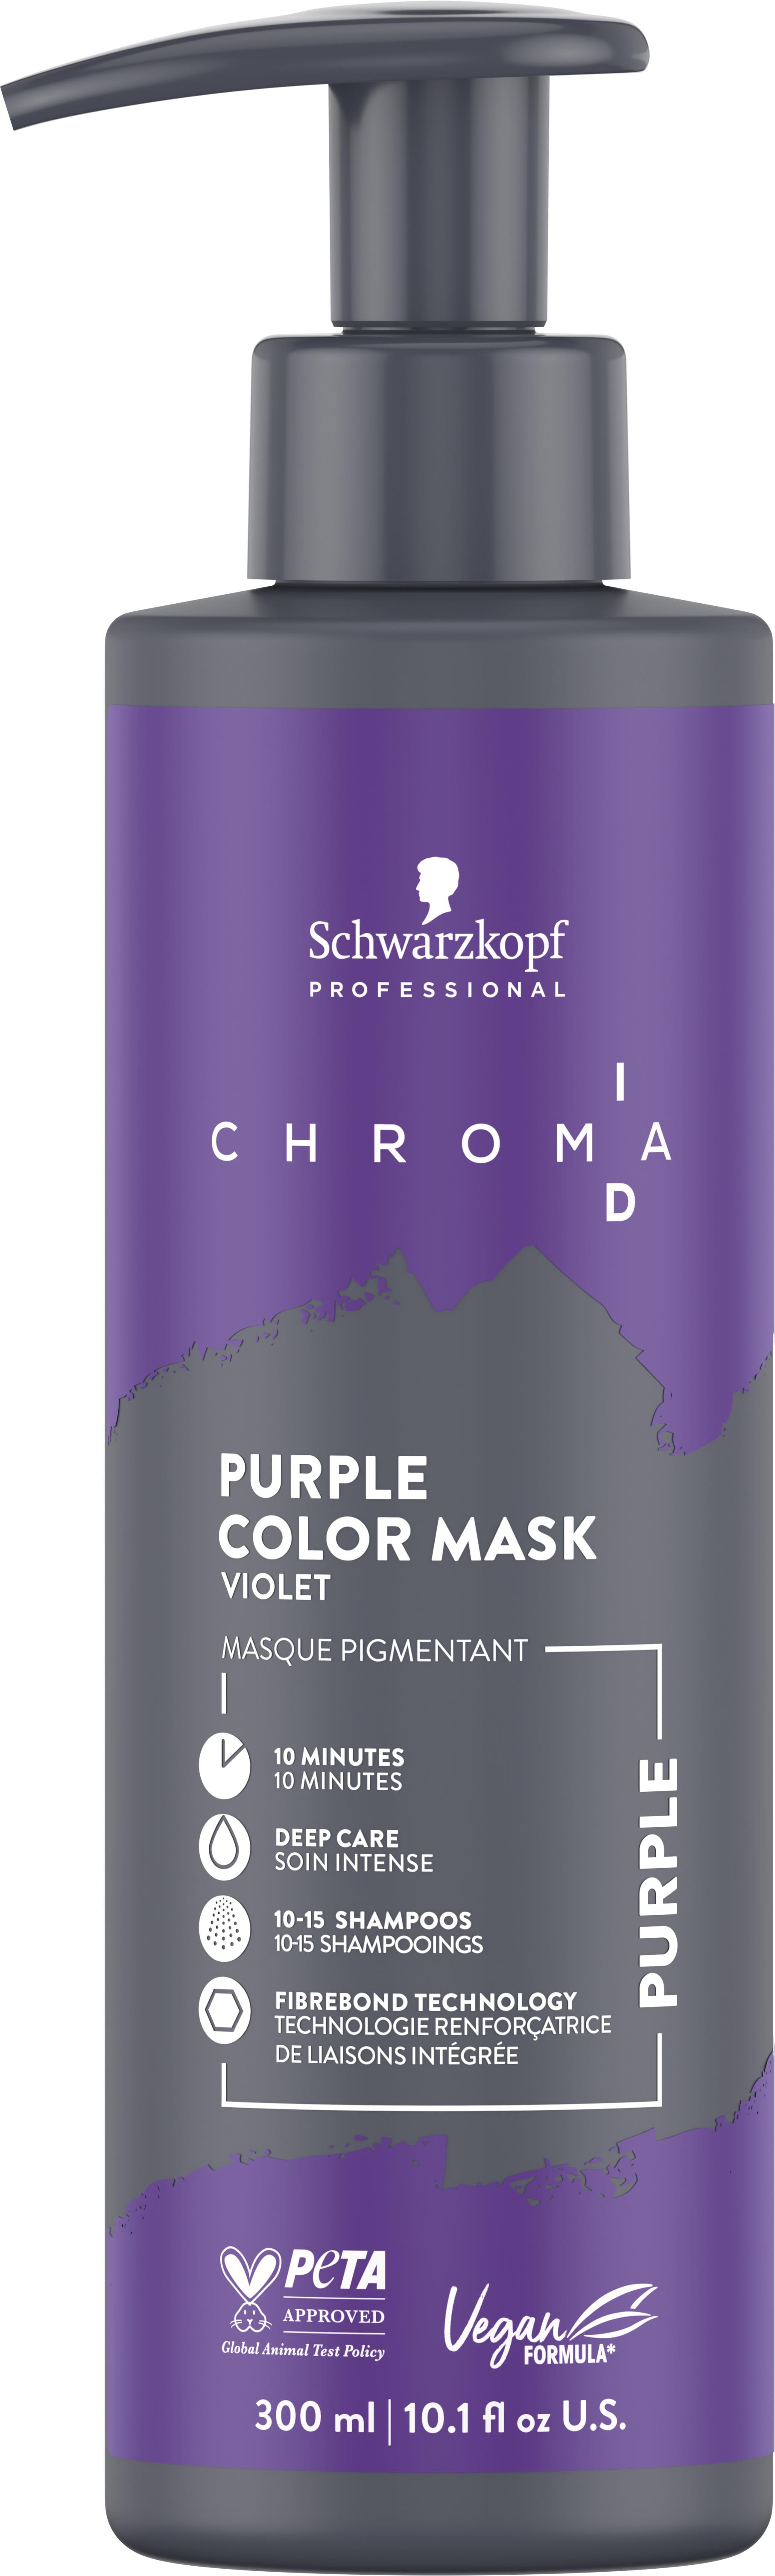 Chroma ID - Bonding Color Mask Purple